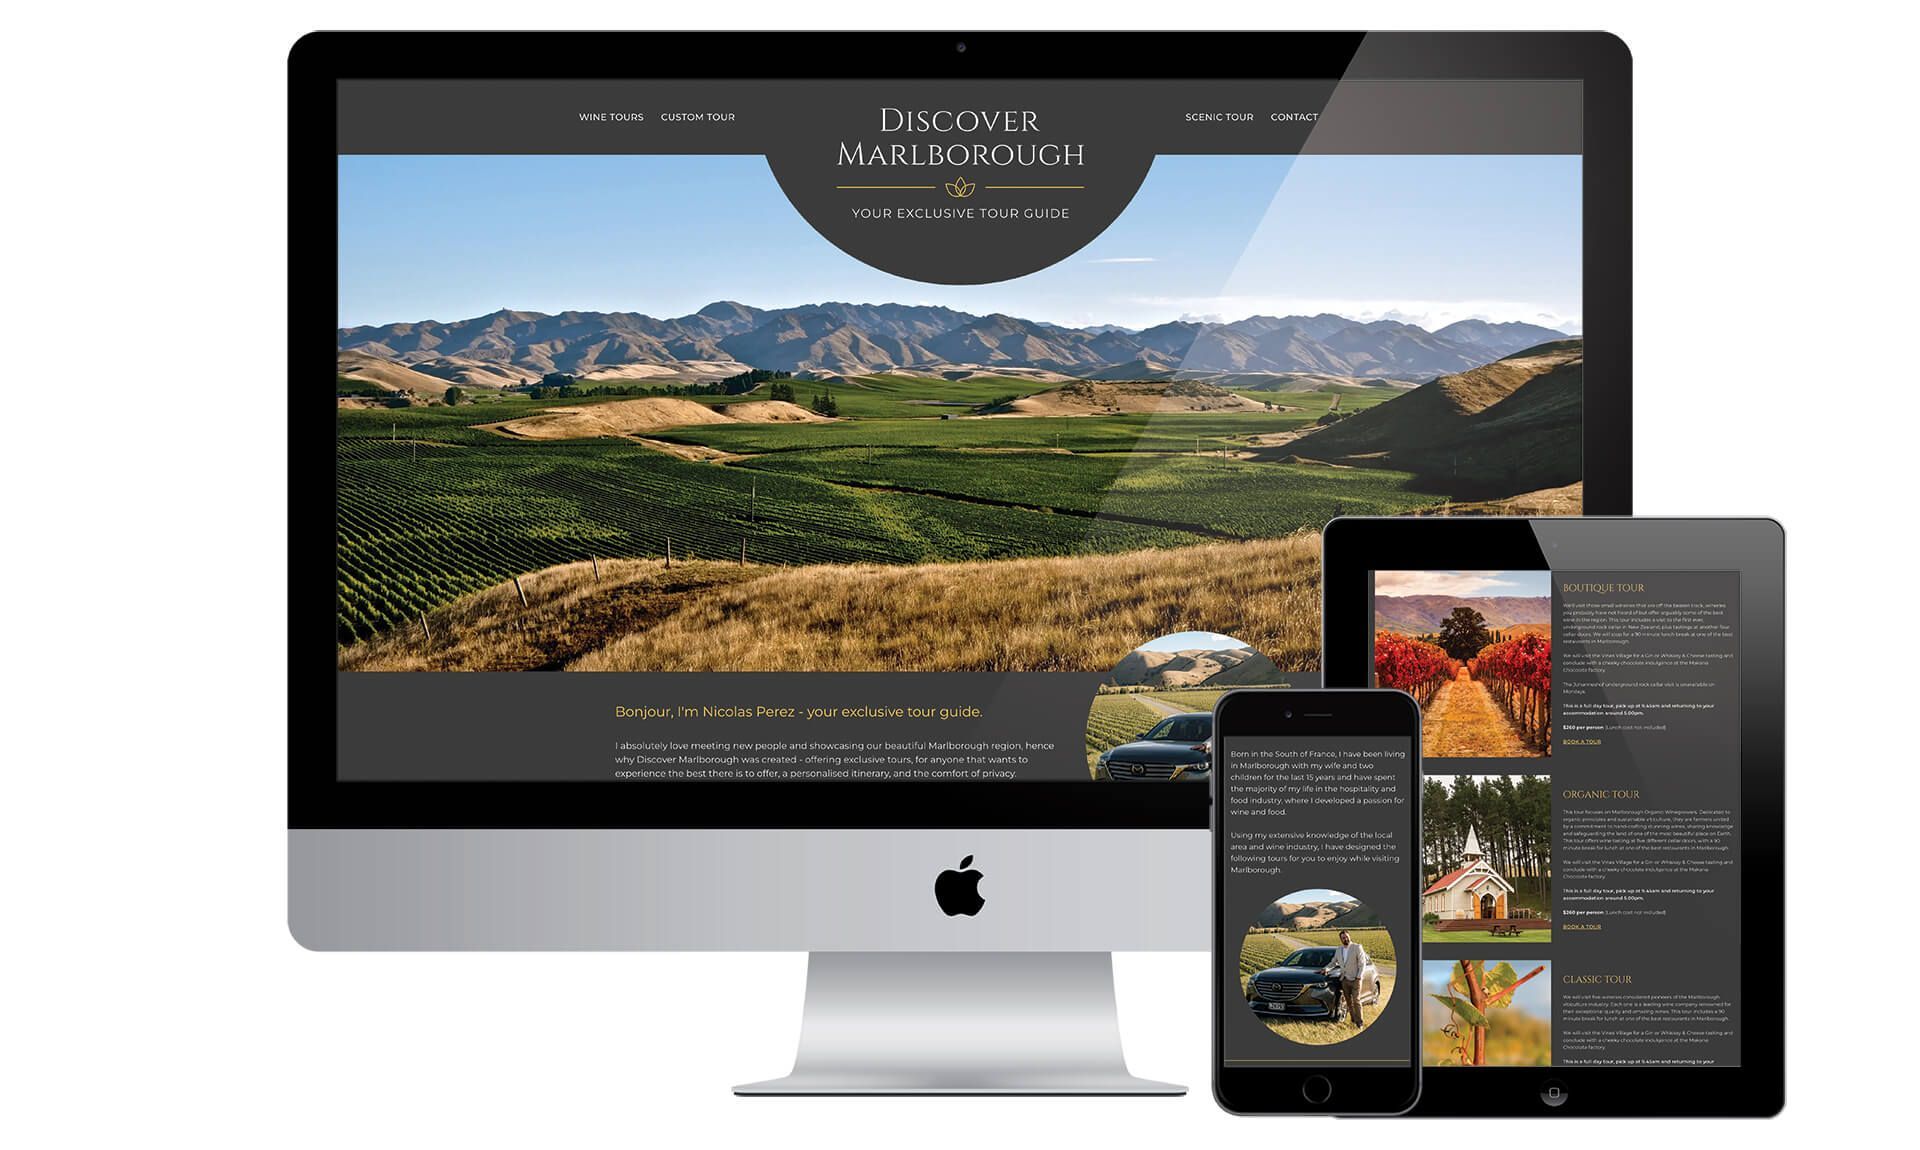 Discover Marlborough website designed by Vanilla Hayes creative graphic design  studio in Blenheim, Marlborough, New Zealand